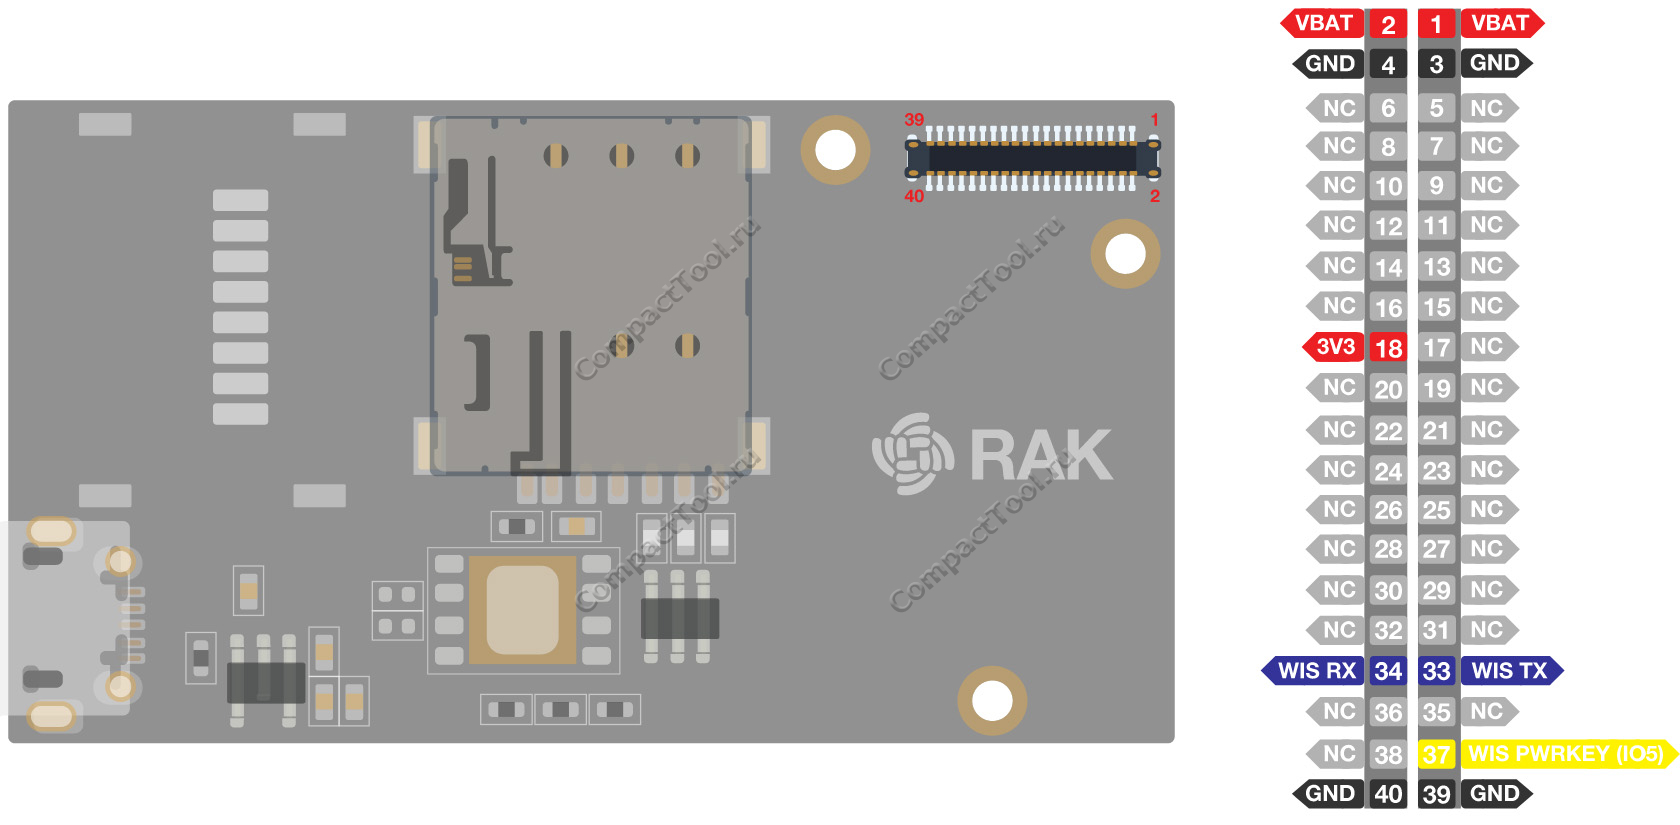 Назначение выводов RAK13101 40-pin разъема Wisblock